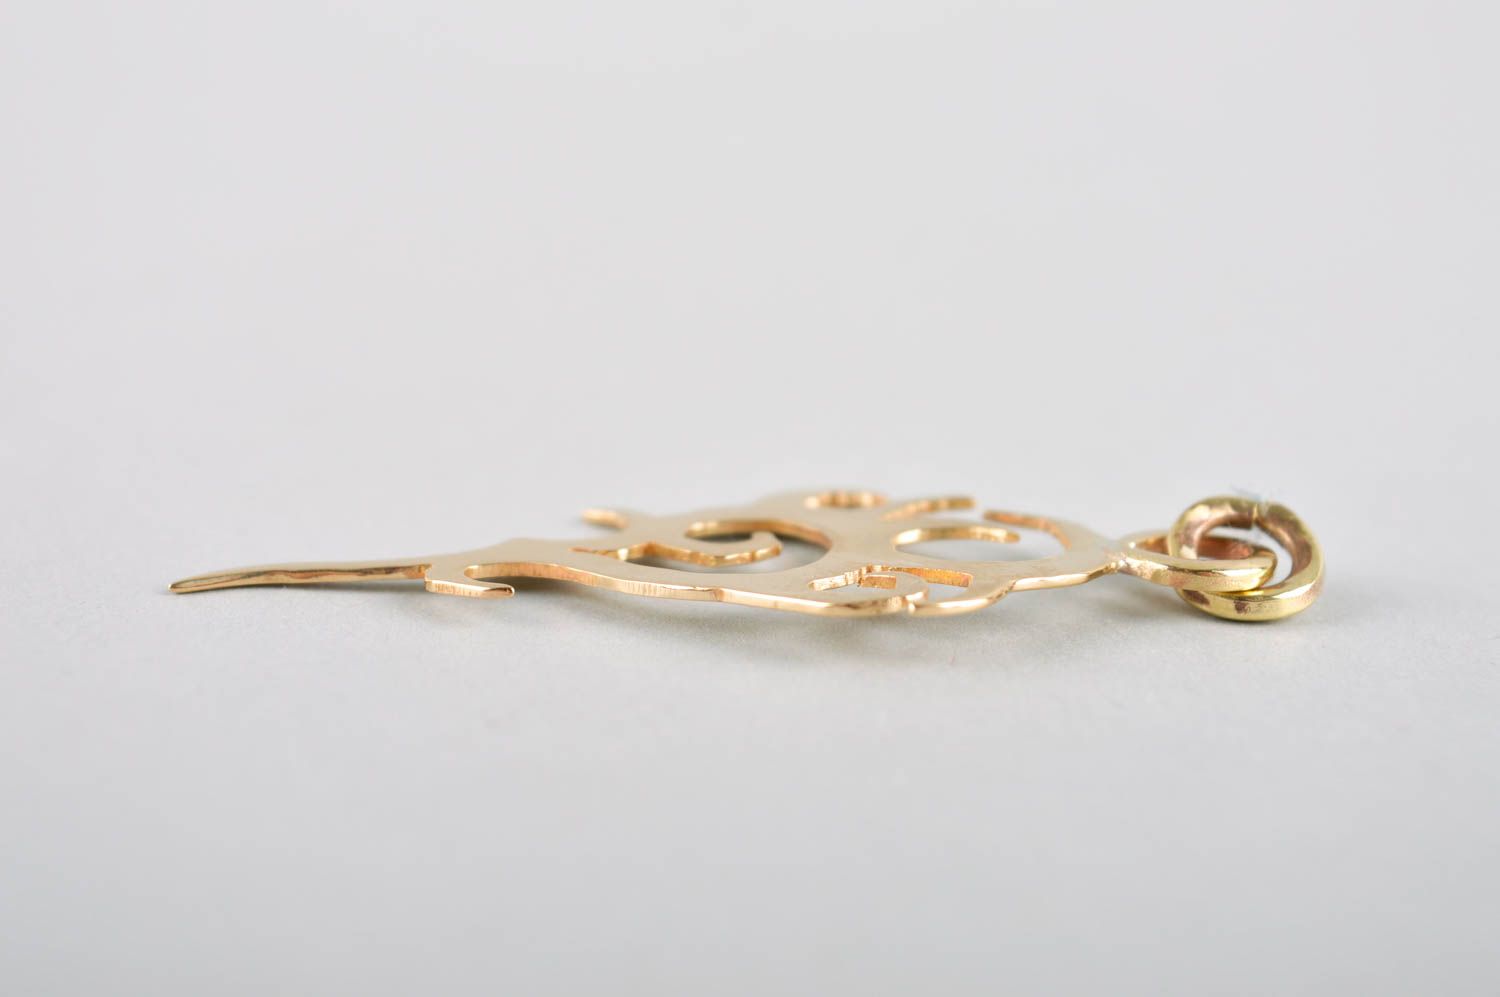 Stylish handmade metal pendant artisan jewelry designs beautiful jewellery photo 4